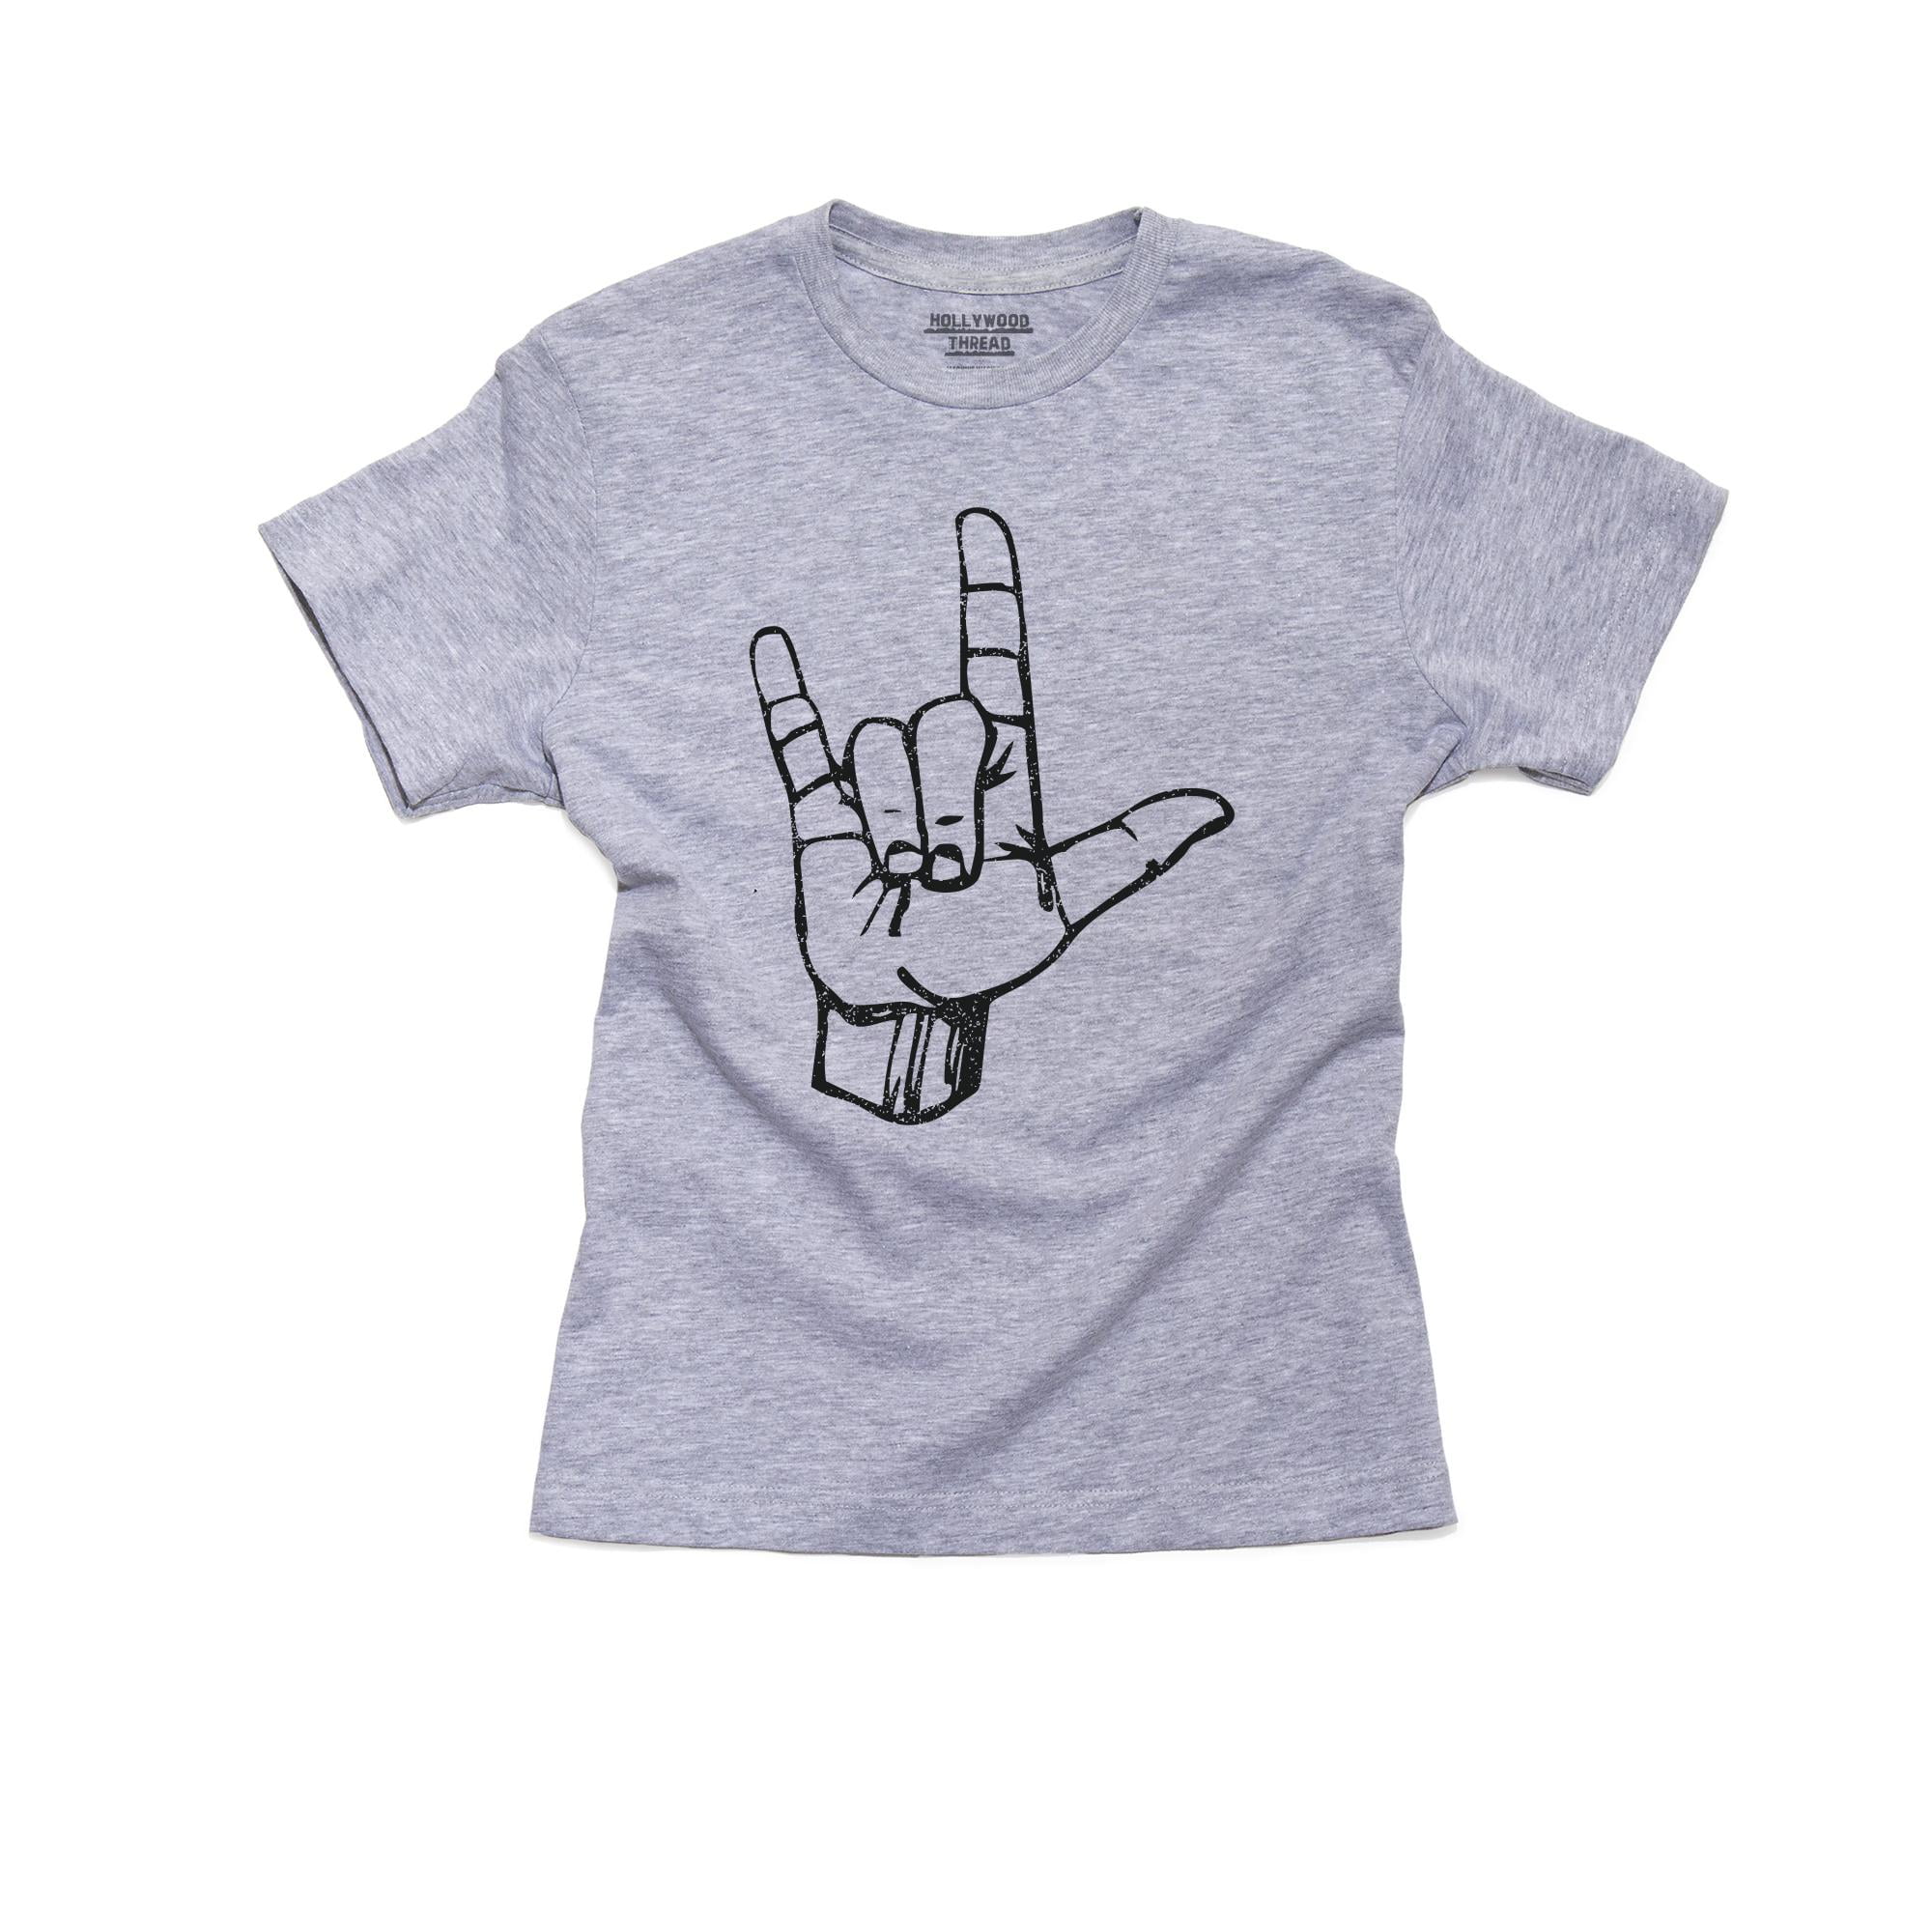 Hollywood Thread I Love You Sign Language Symbol Asl Boy S Cotton Youth Grey T Shirt Walmart Com Walmart Com